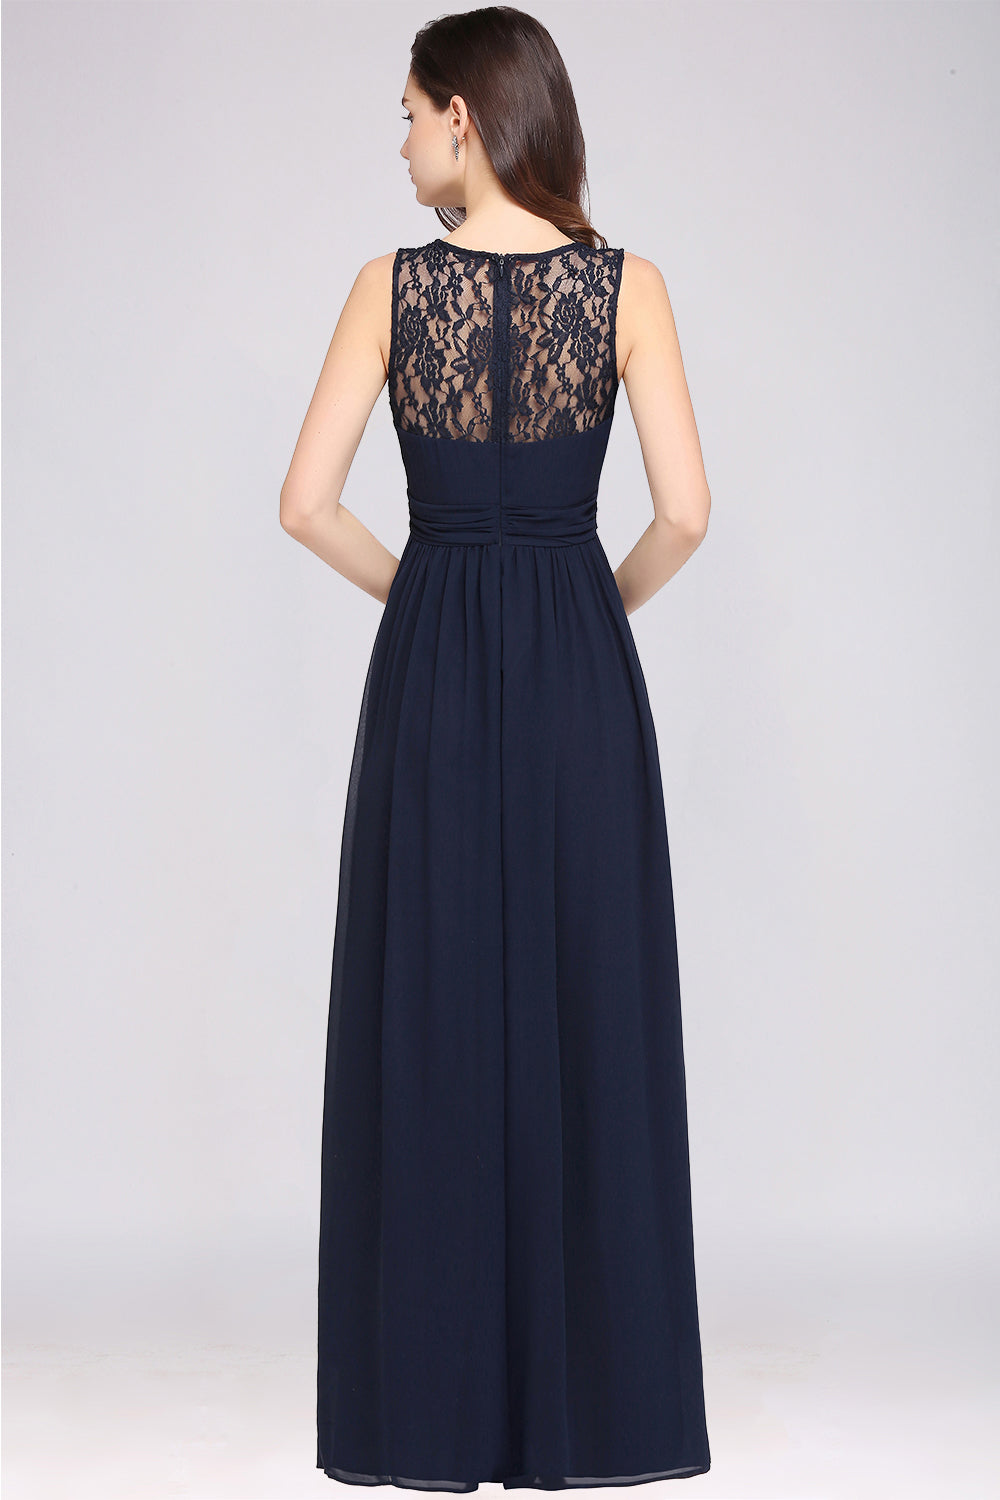 Affordable Chiffon Jewel Sleeveless Lace Bridesmaid Dress Online with Ruffle